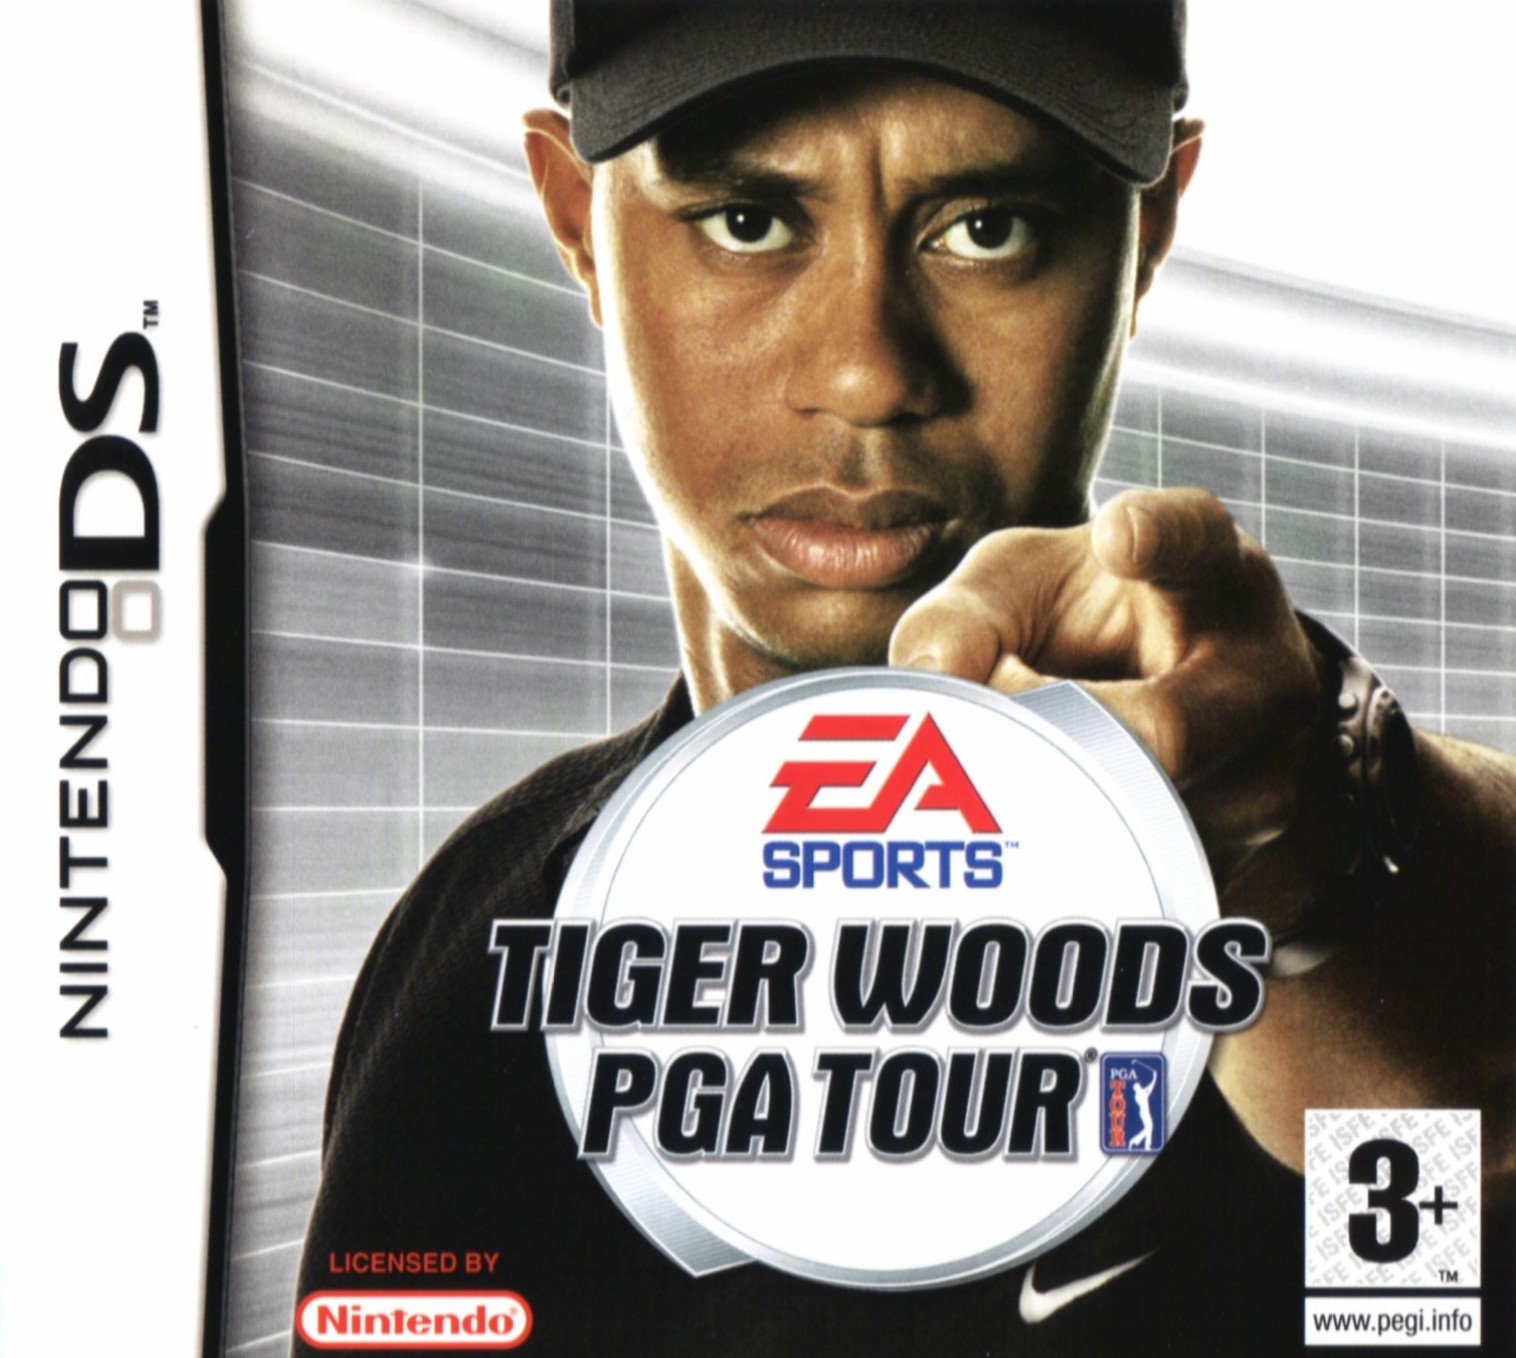 Tiger Woods PGA Tour Images LaunchBox Games Database